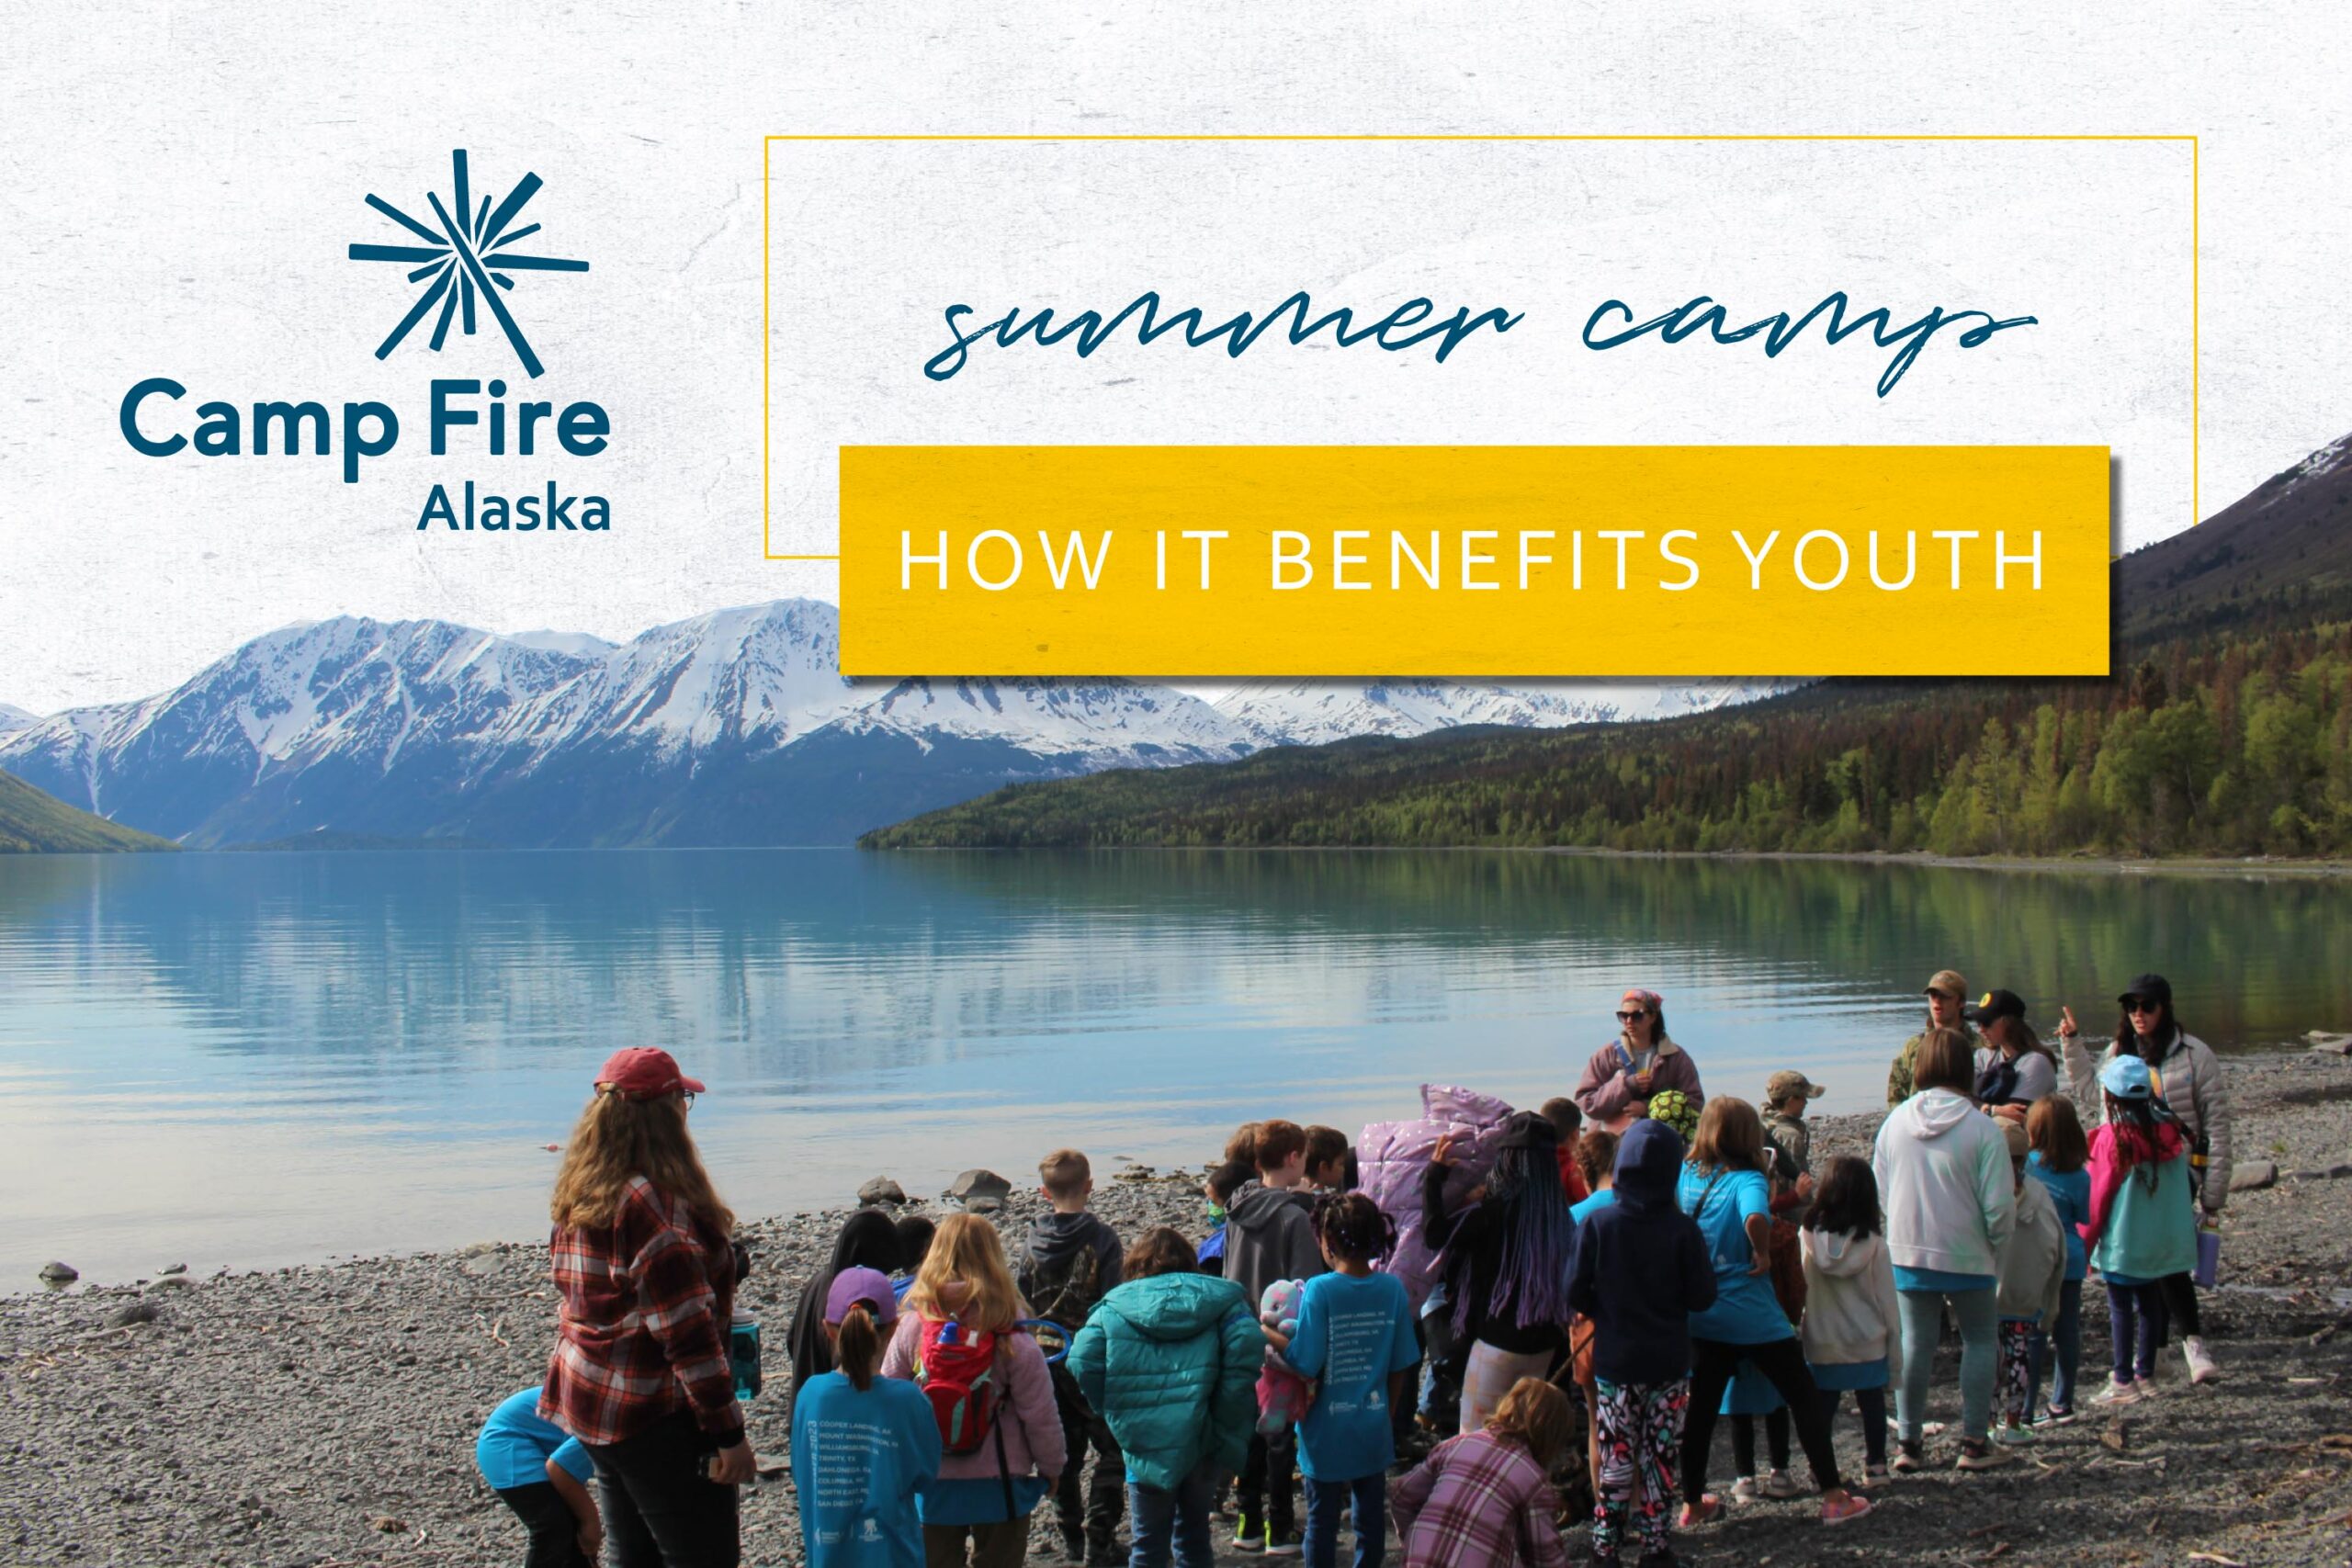 Camp Fire Alaska | Summer Camp - How It Benefits Youth